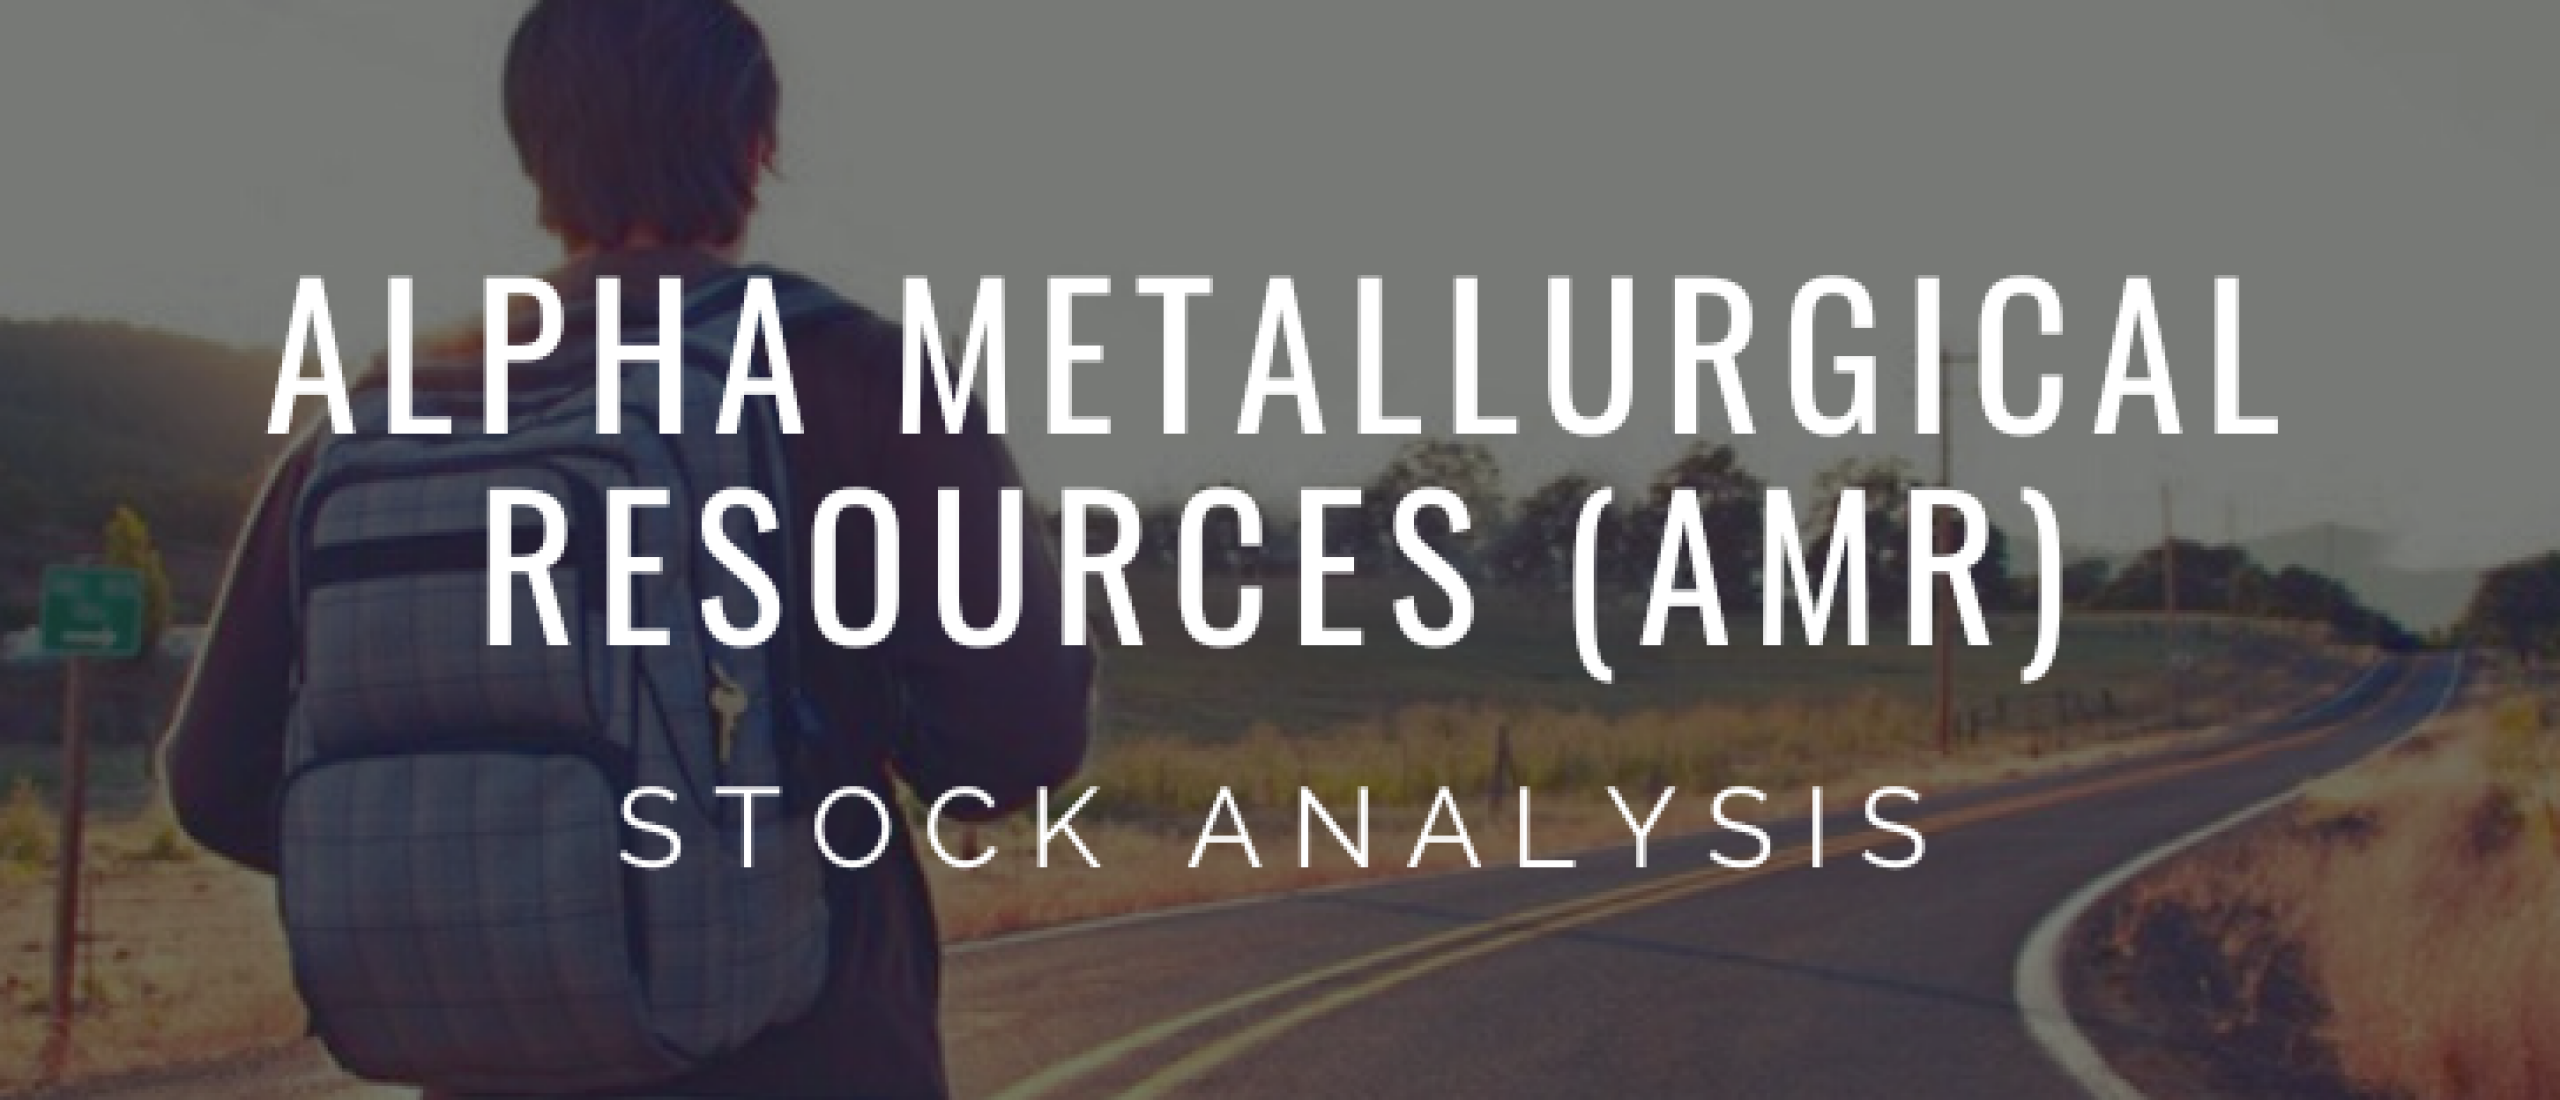 alpha-metallurgical-resources-amr-stock-analysis